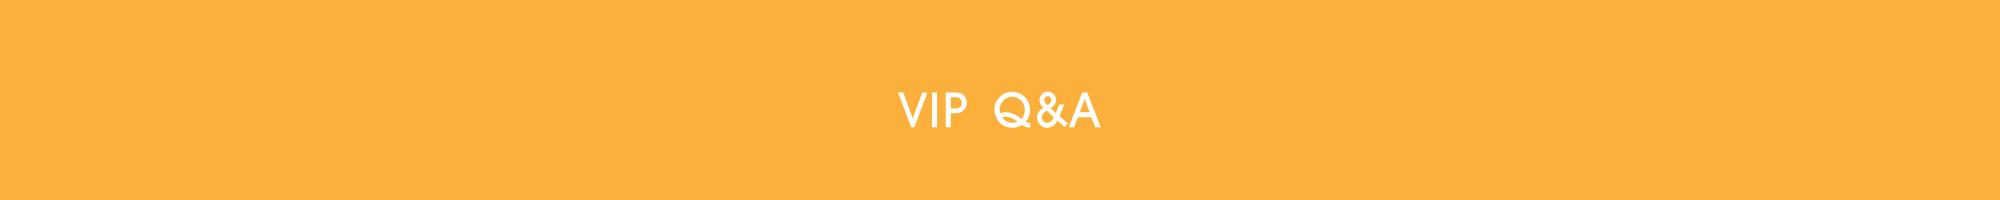 VIP Q&A